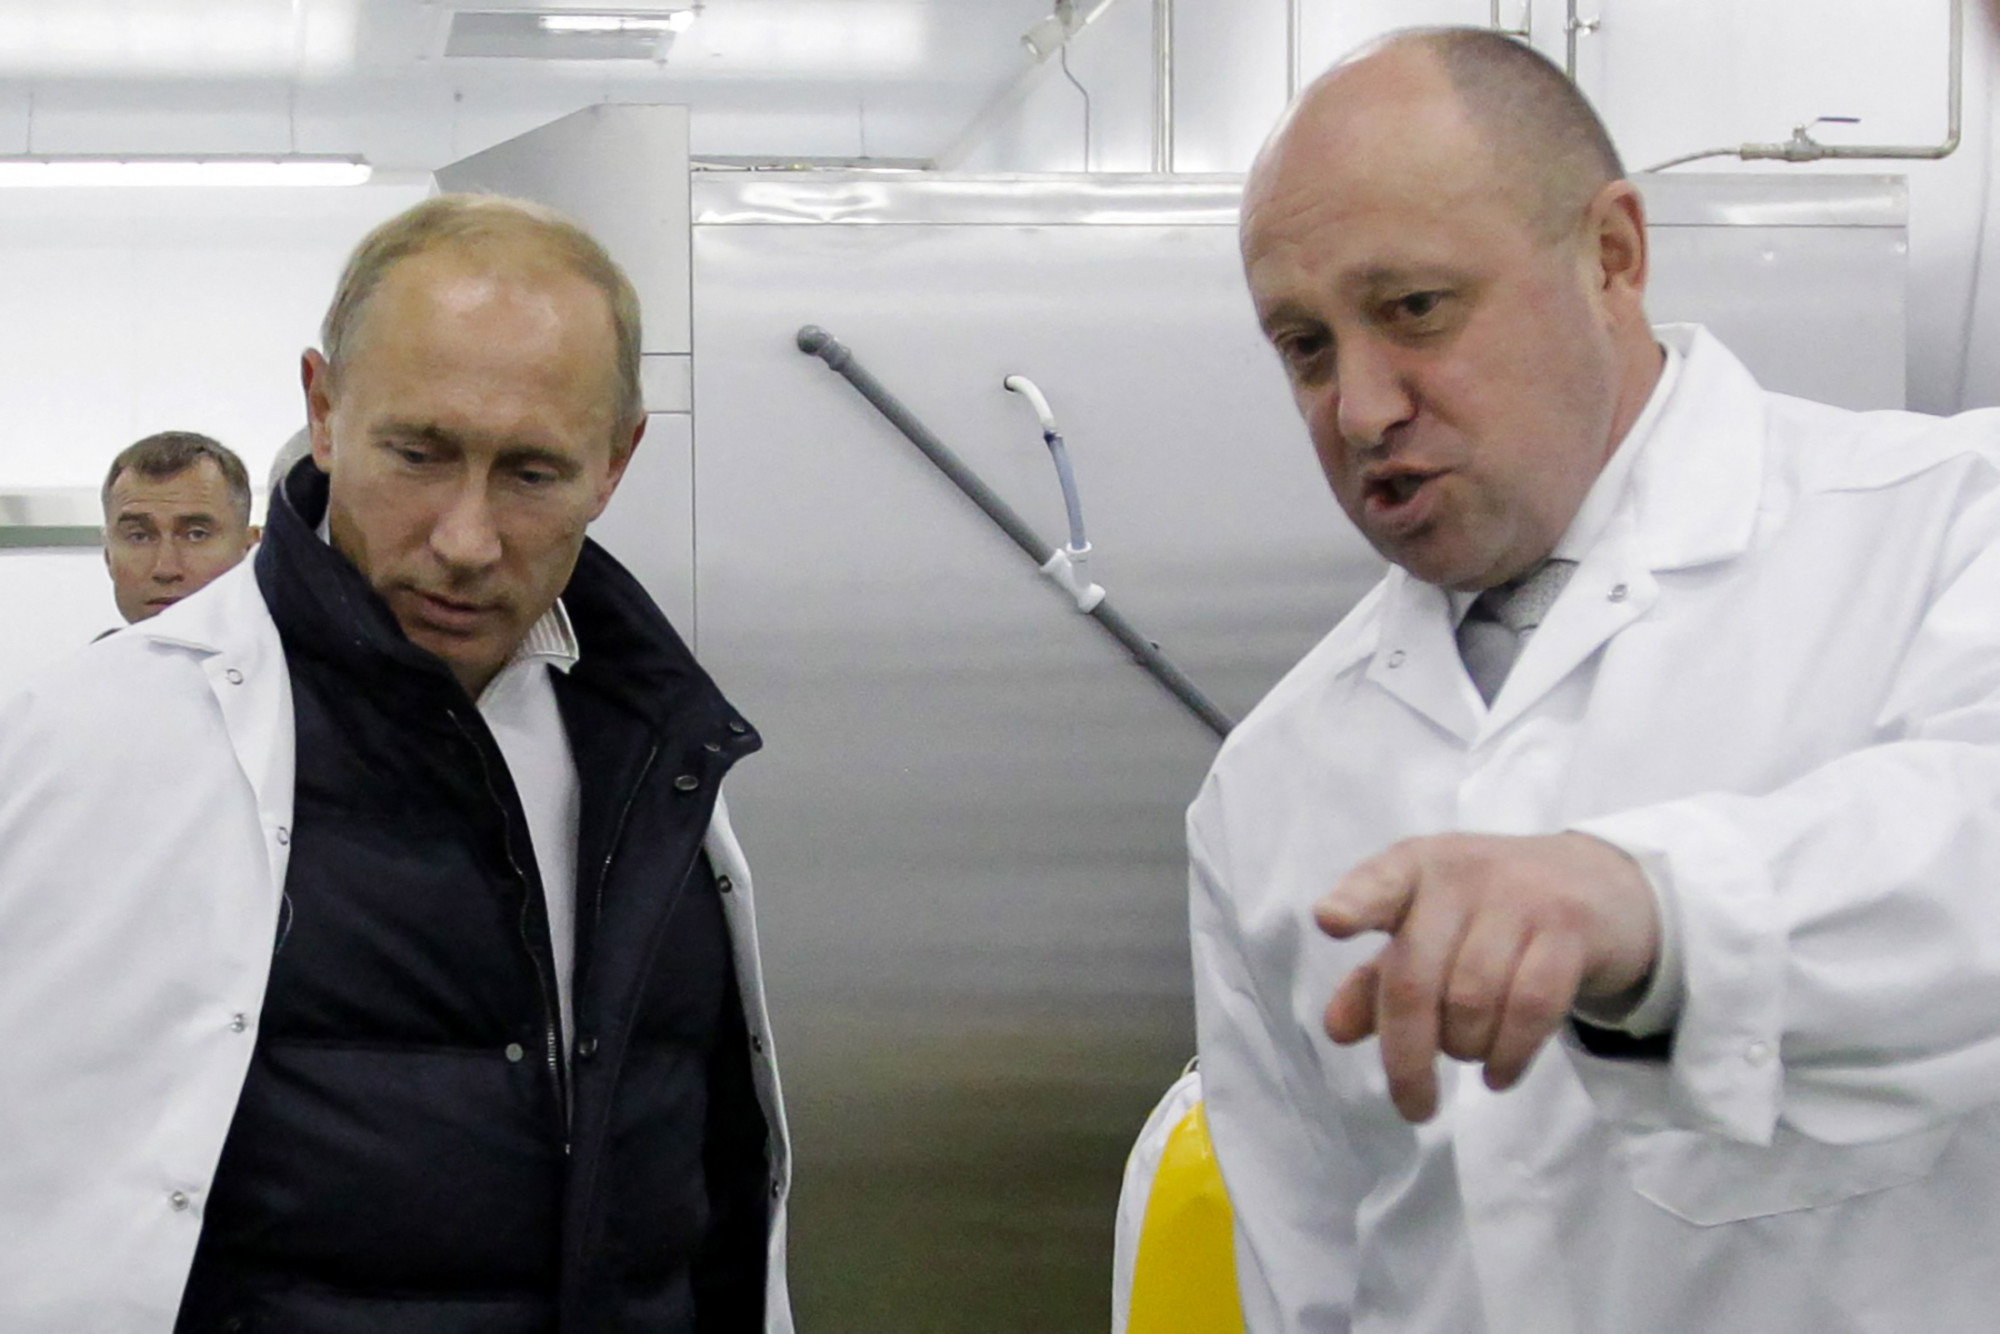 Yevgeny Prigozhin is also referred to as Putin's chef, head of the Wagner mercenaries, with Vladimir Putin in St. Petersburg in 2010.